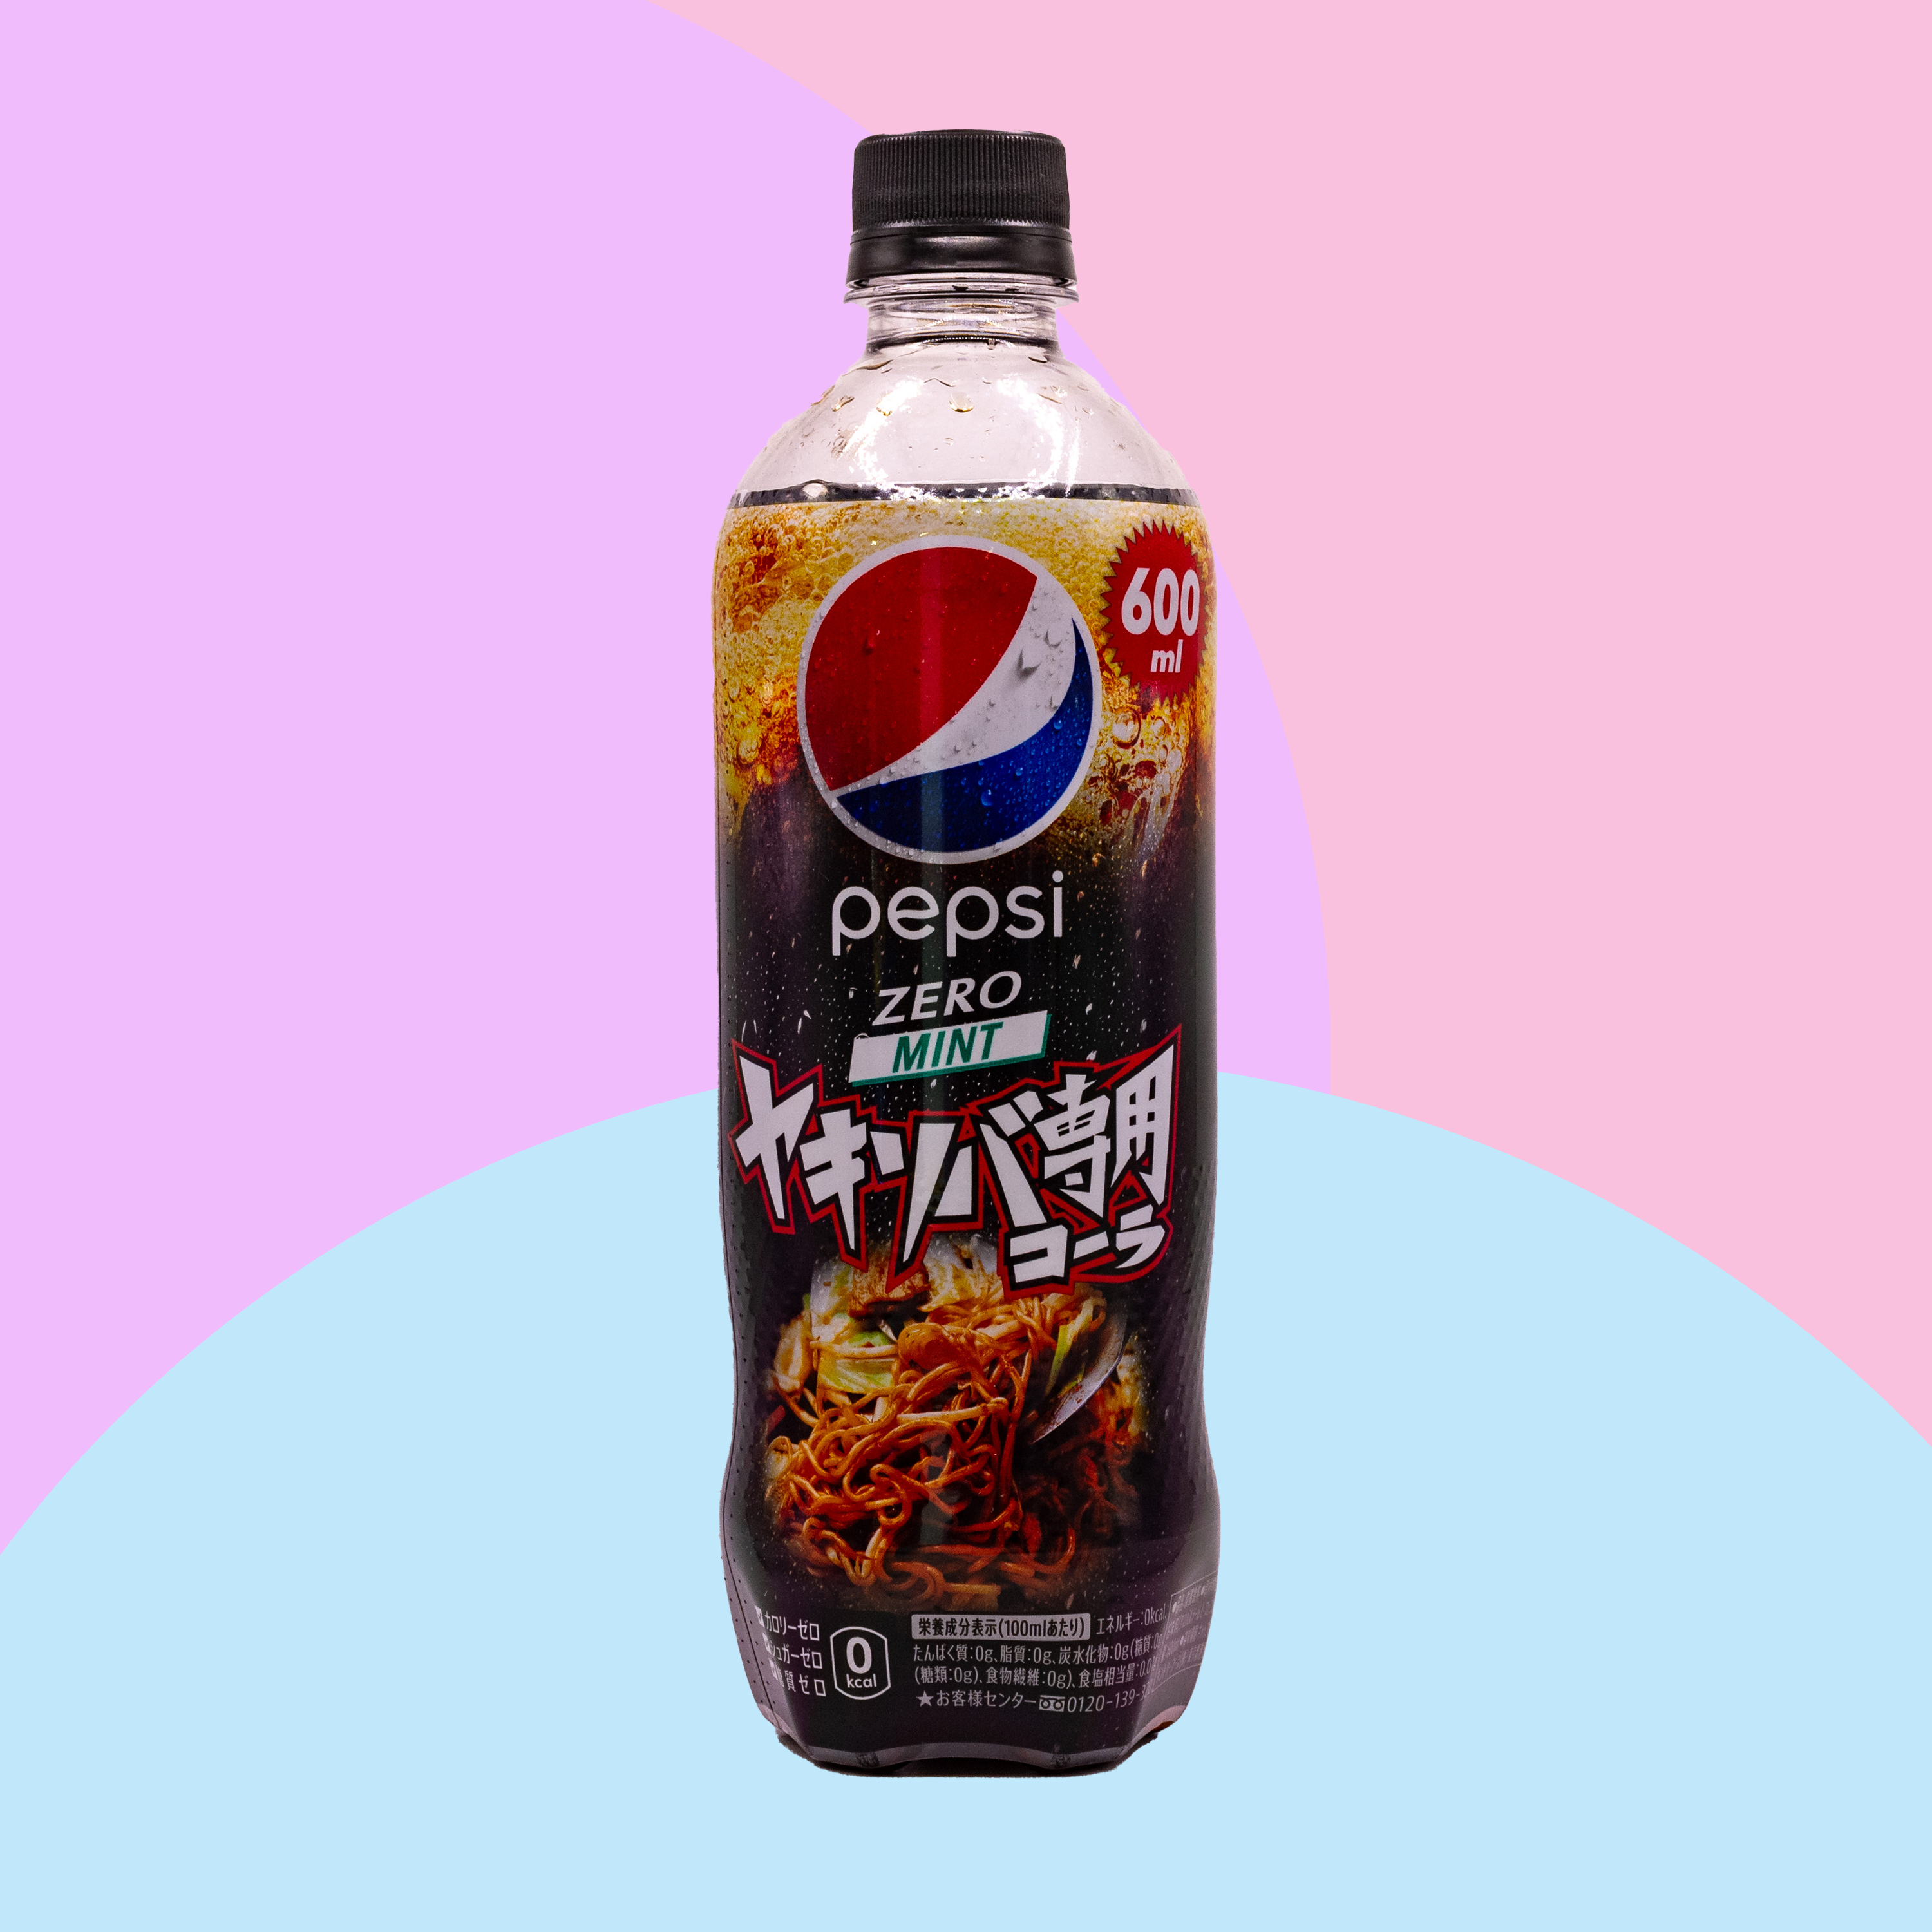 Pepsi Zero Mint - Soda Pop - 600ml (China)